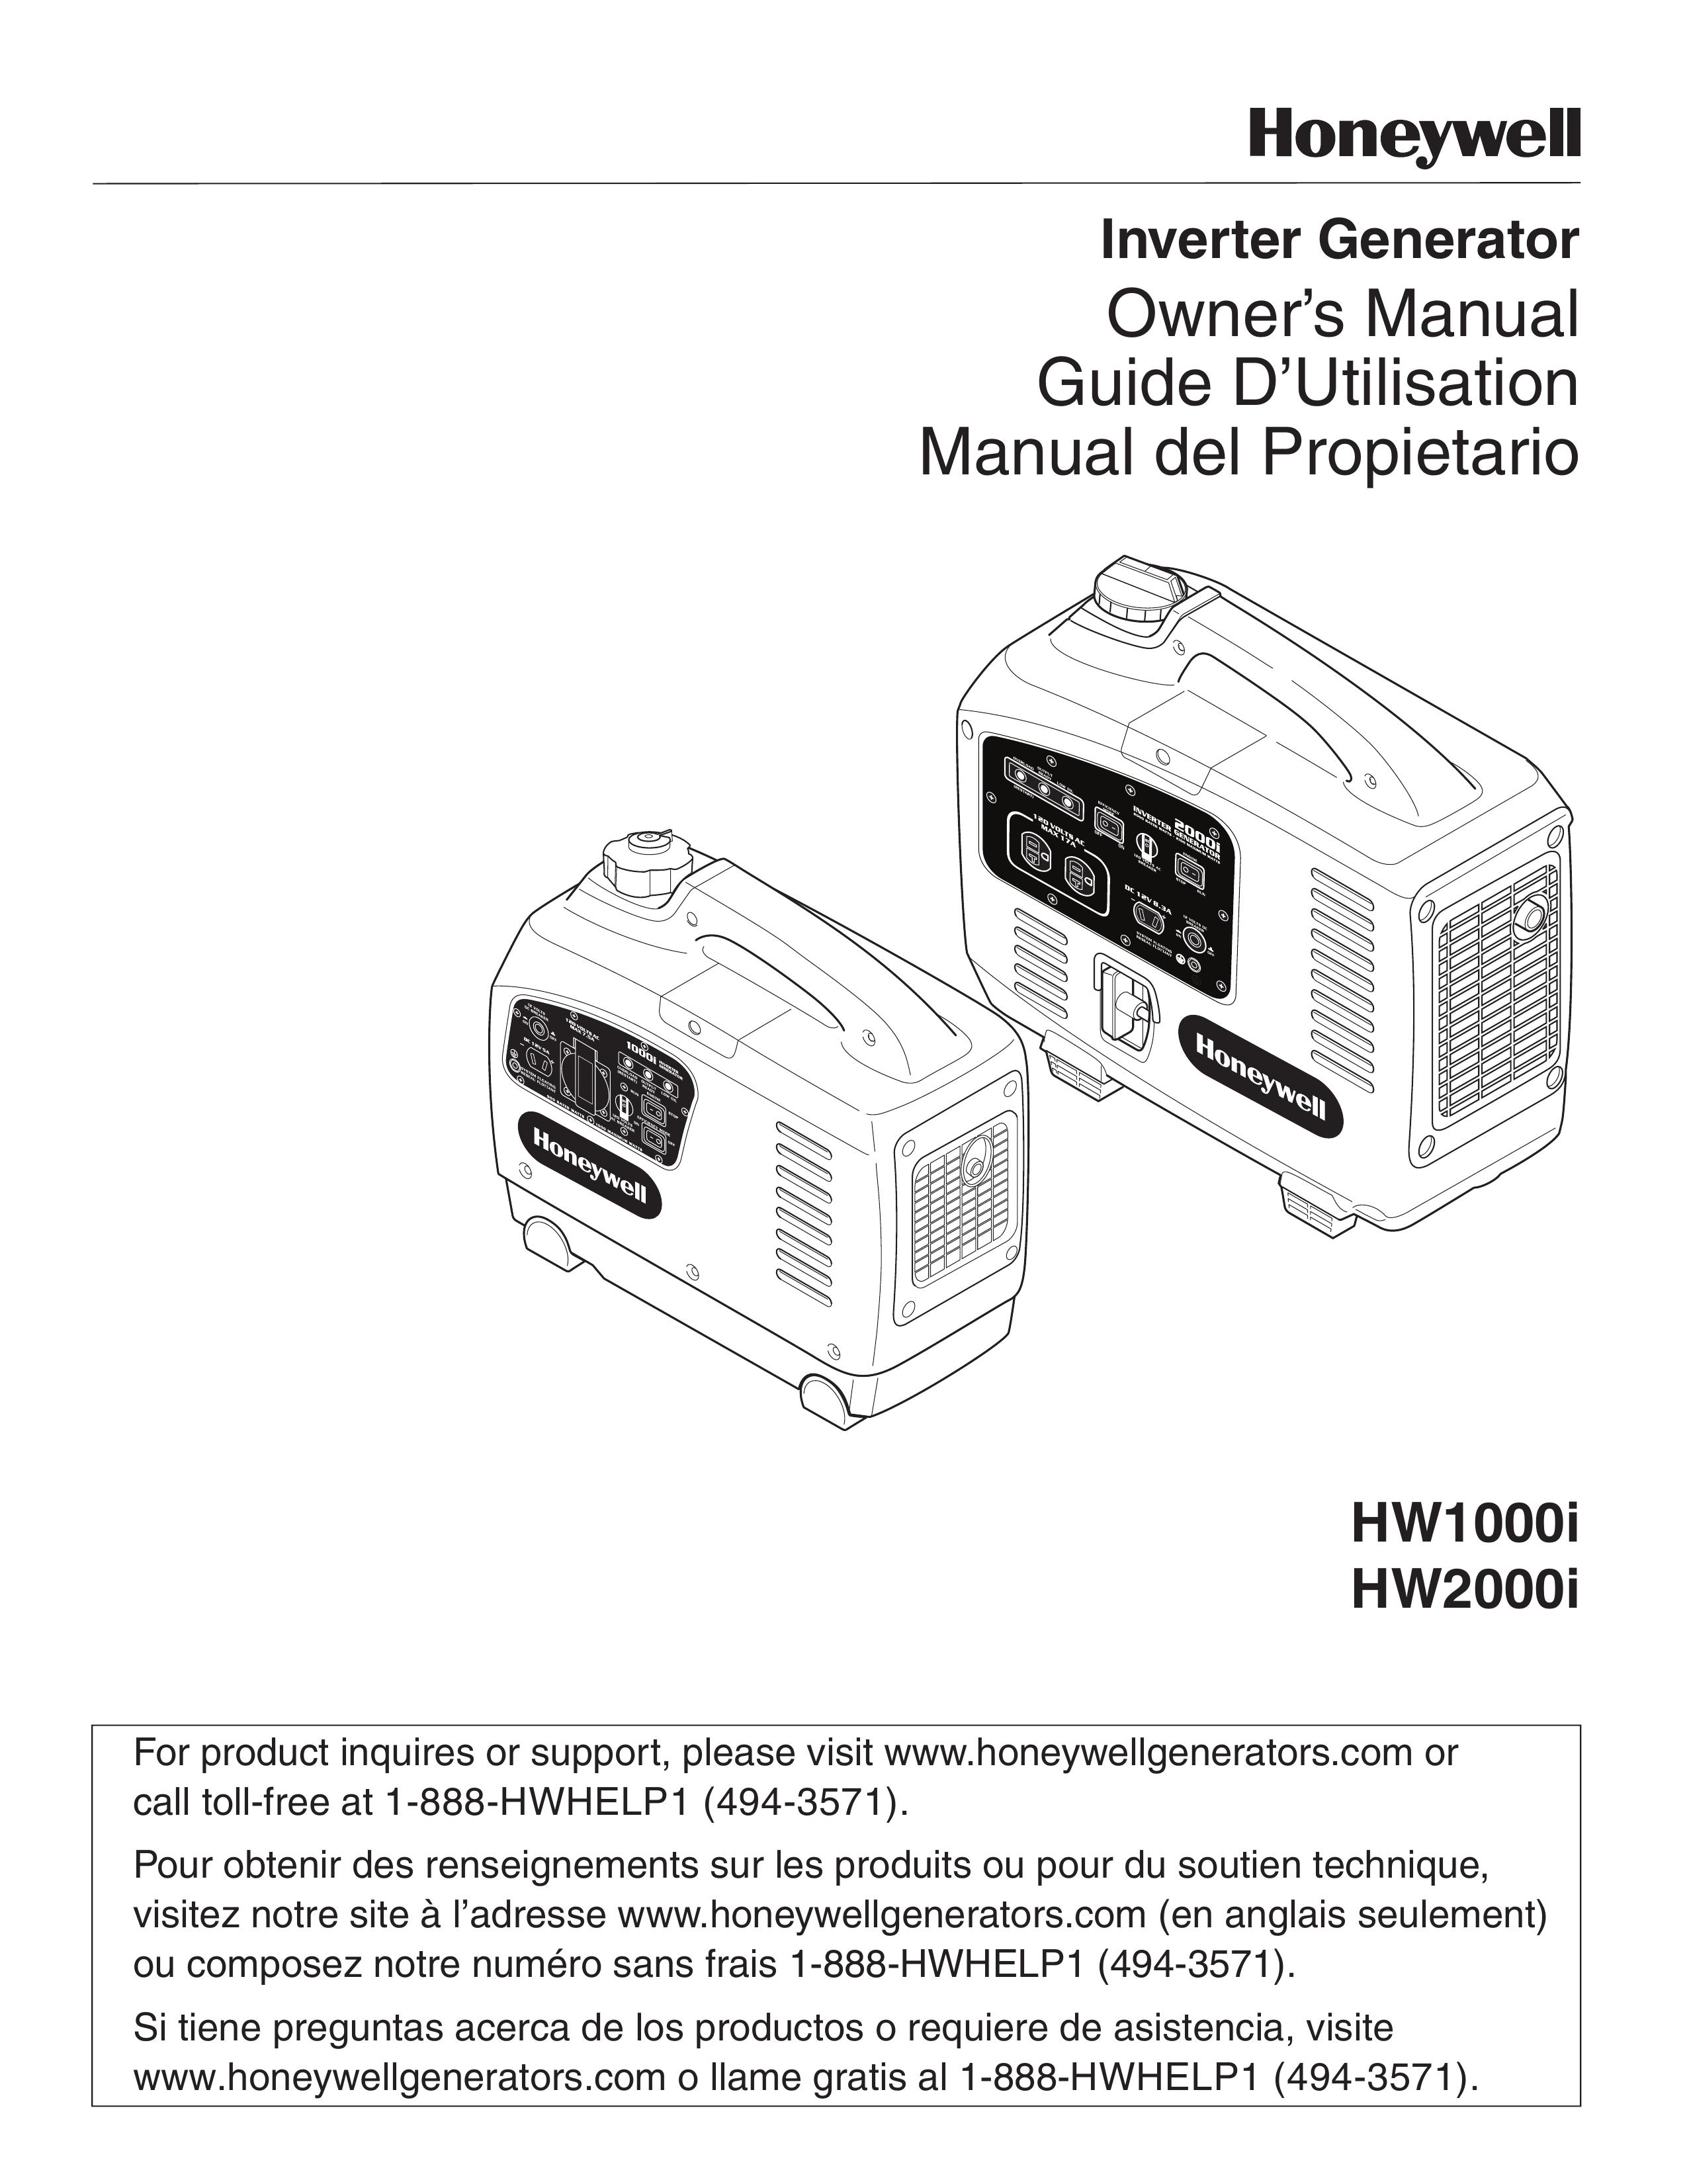 Honeywell HW1000i Portable Generator User Manual